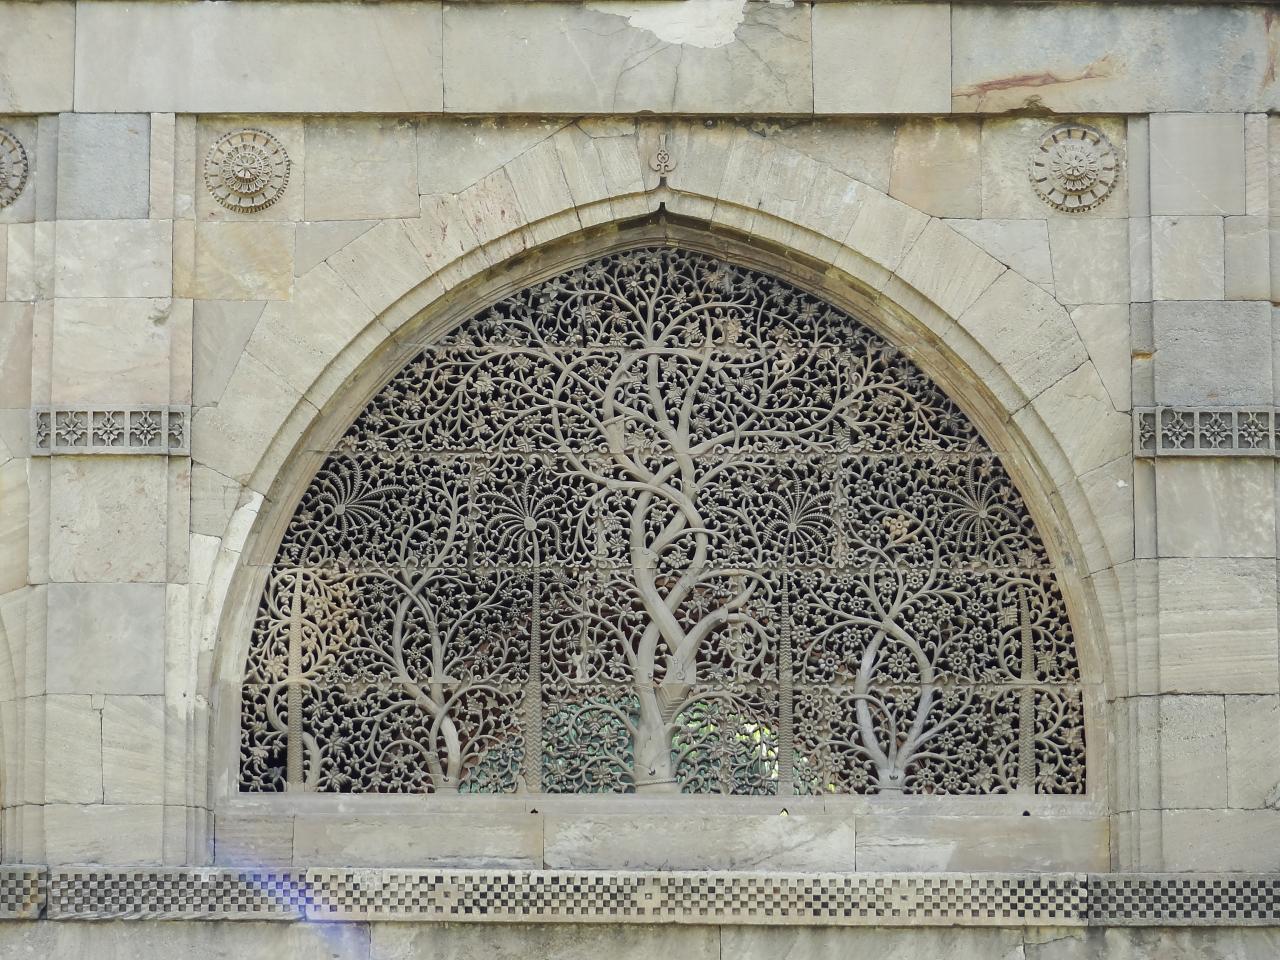 Sidi-Saiyyed-Moschee in Ahmedabad, Indien